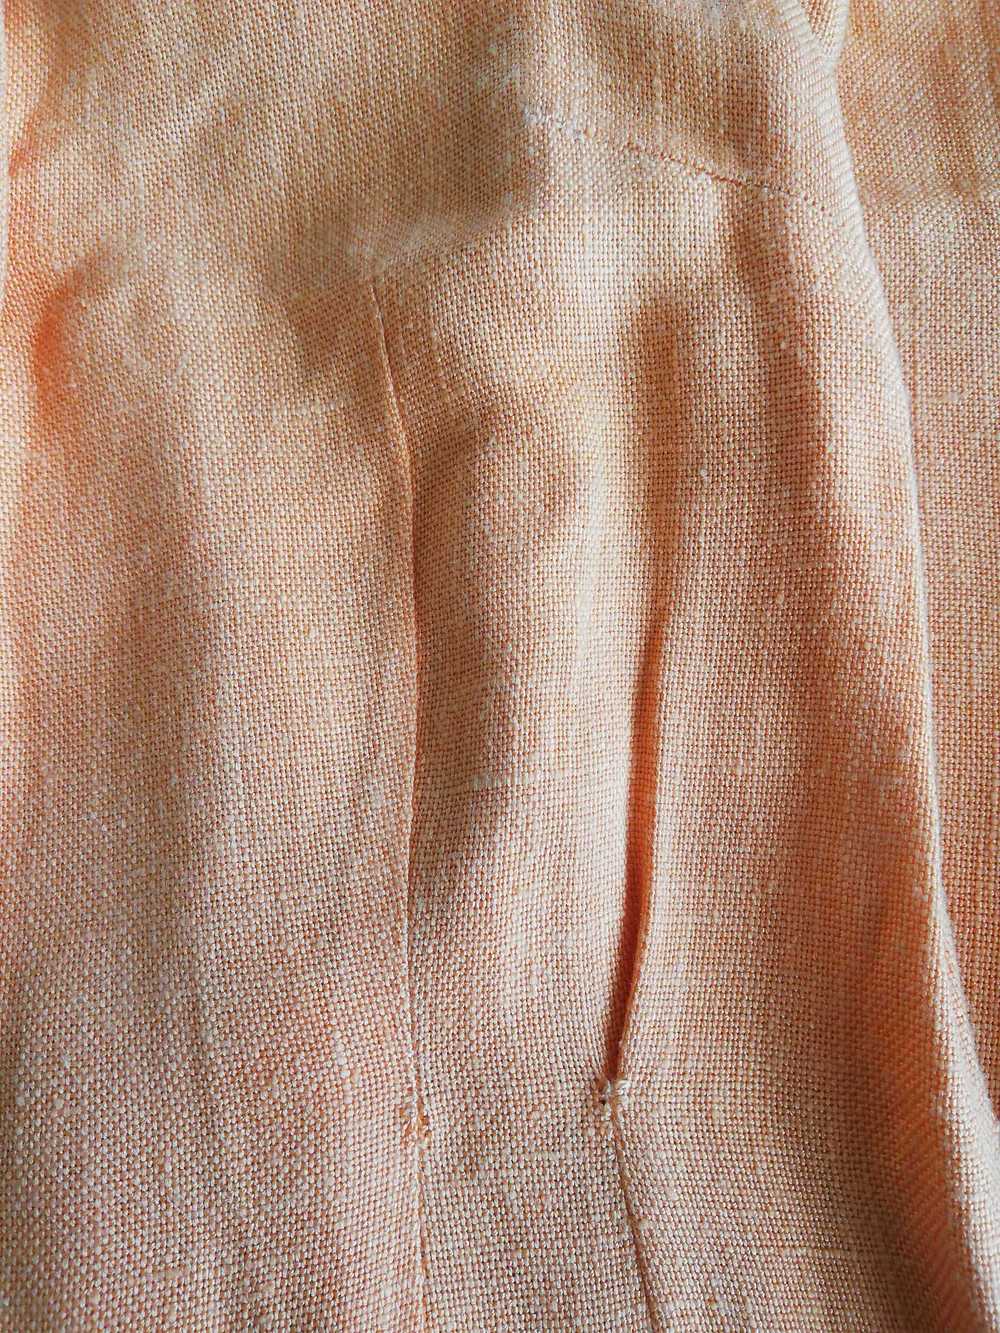 Robe en lin - Robe en lin orange année 70 petites… - image 7